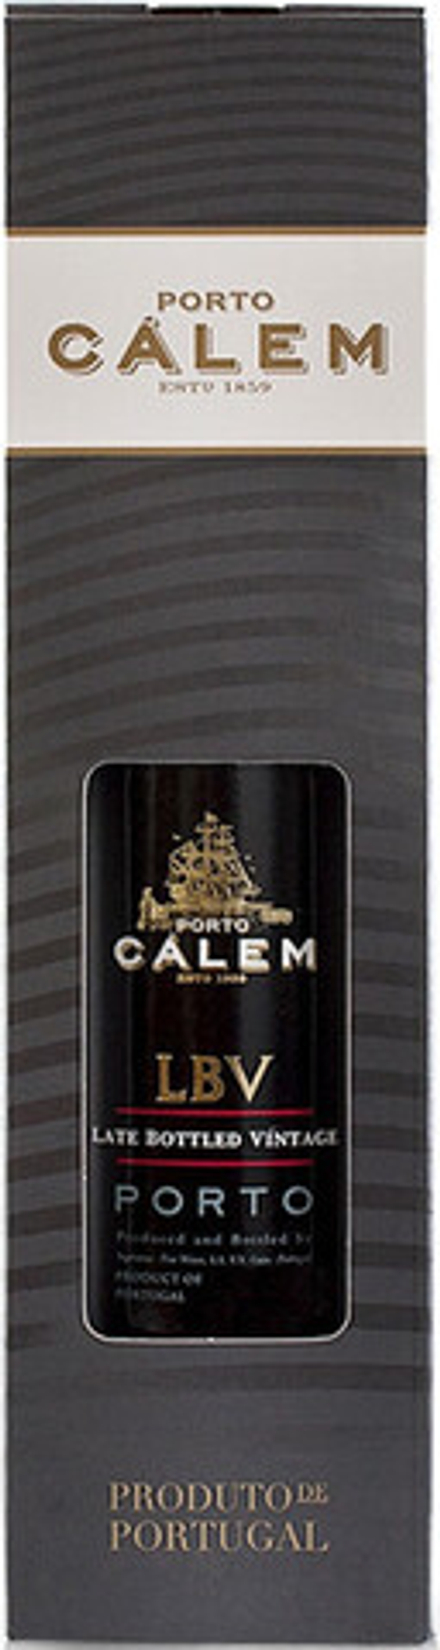 Портвейн Calem Late Bottled Vintage Port gift box, 0,75 л.